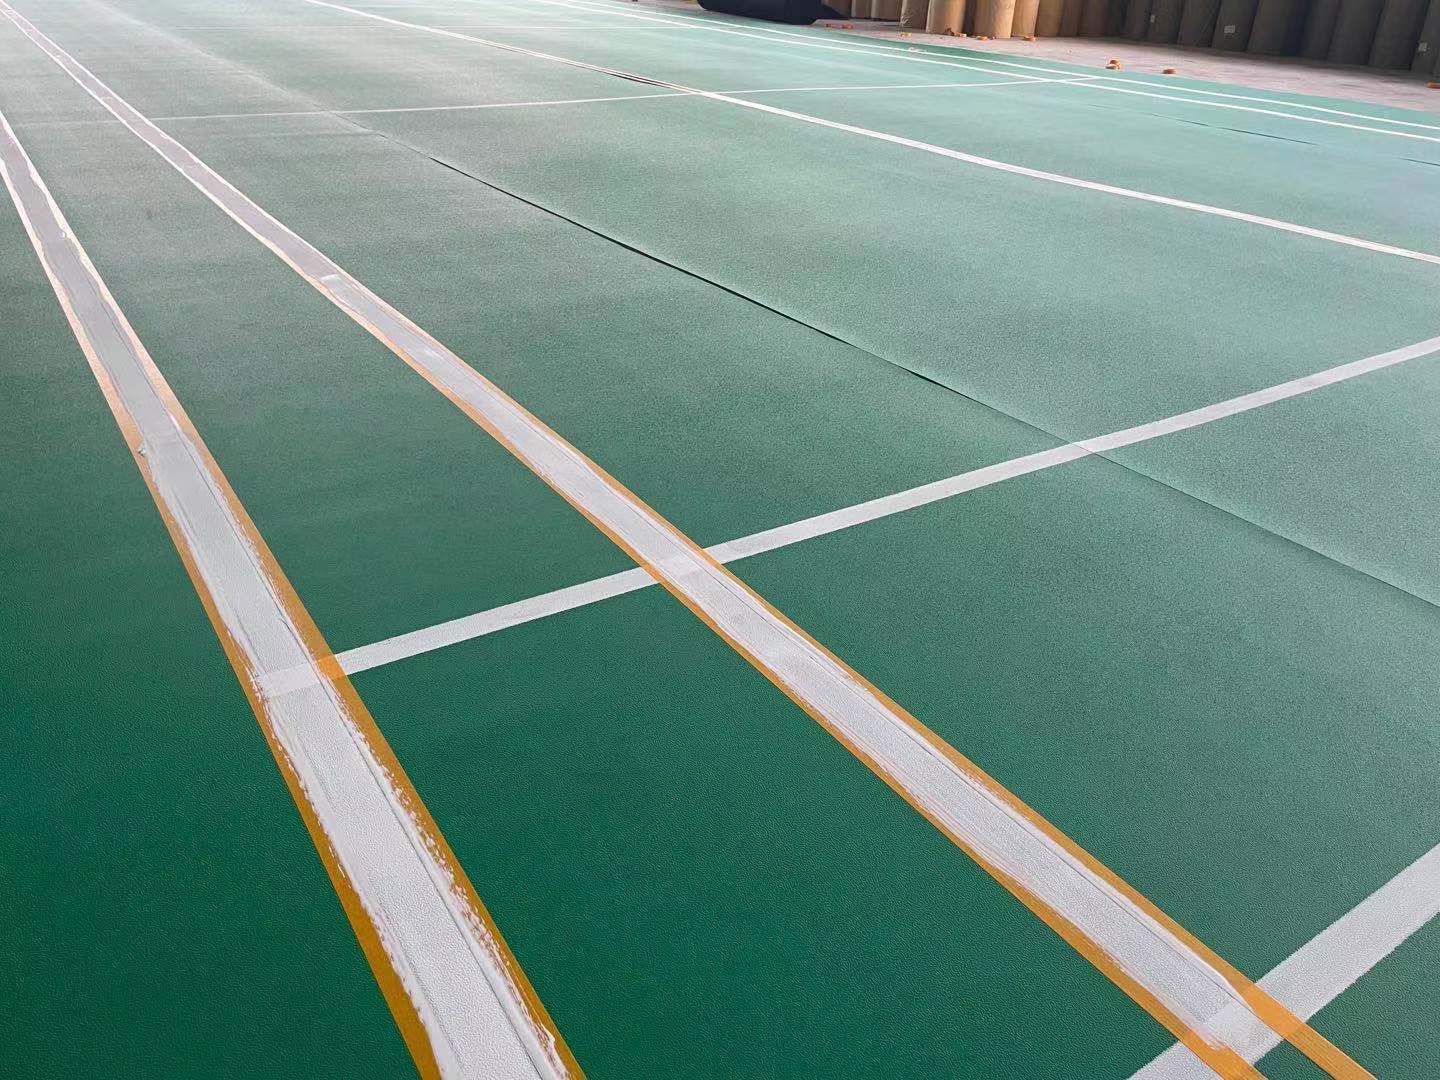 SinoCourts can provide customerized pvc sports flooring